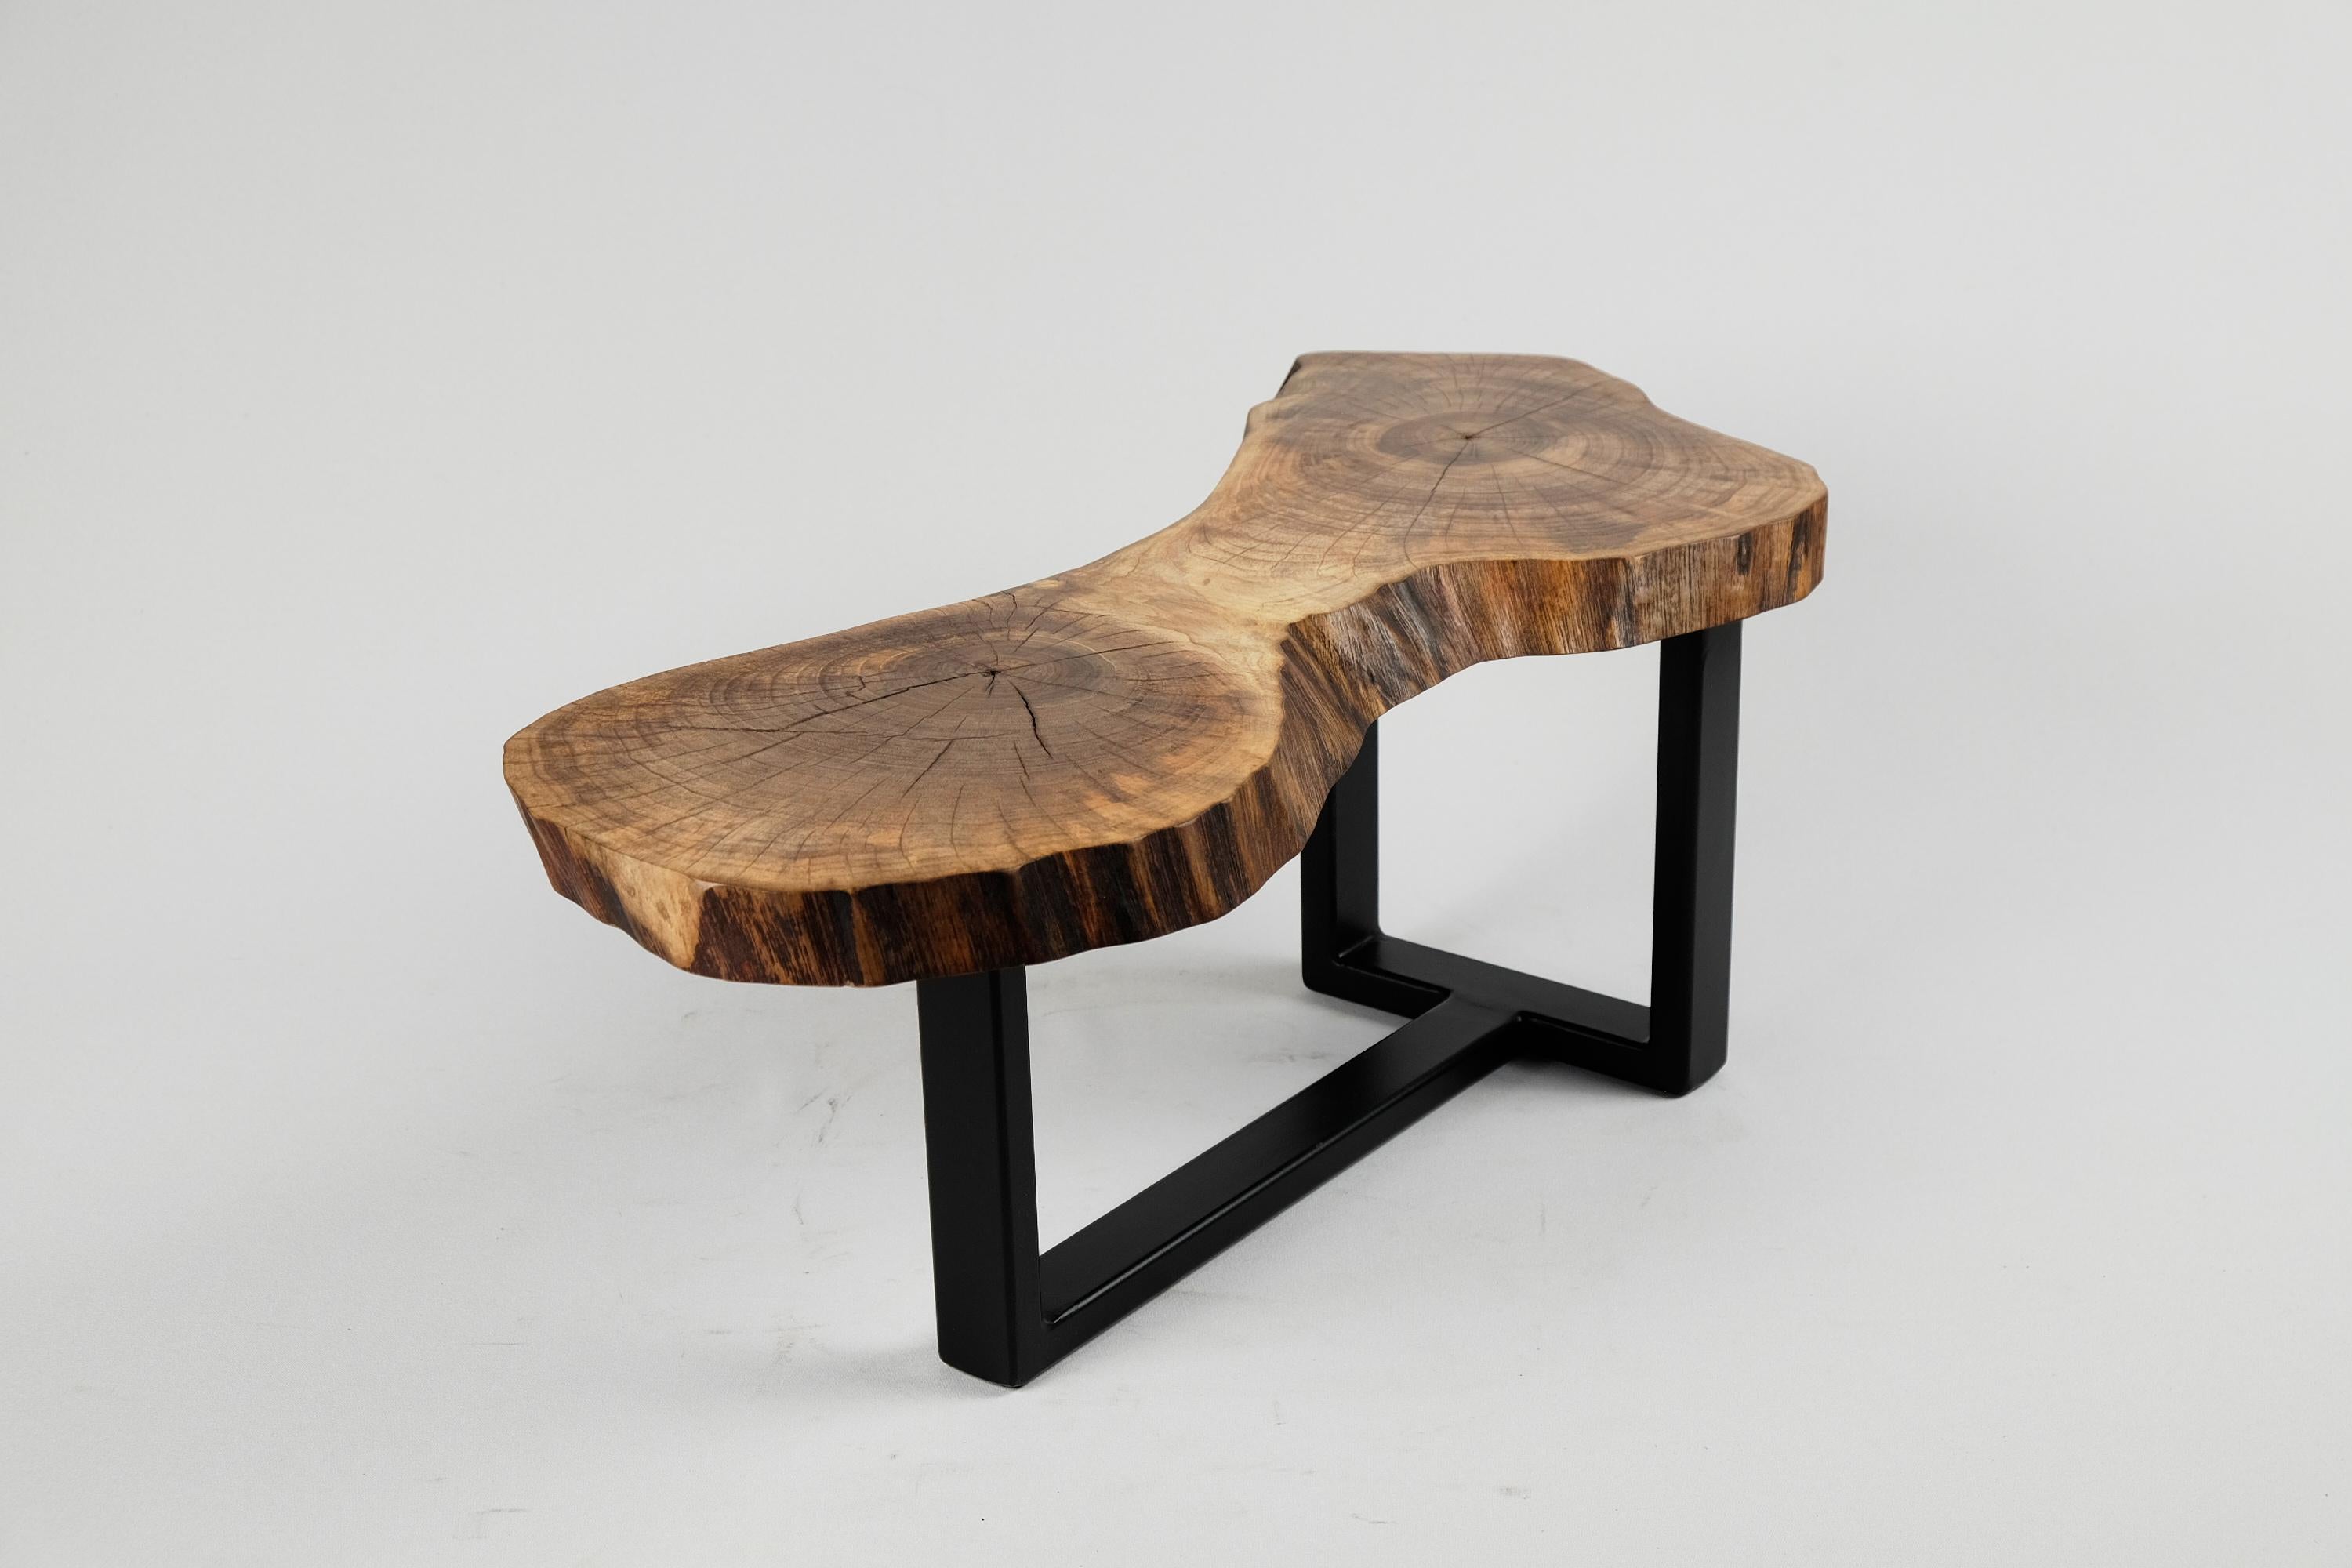 Original Contemporary Design, Burnt Oak with Steel, Unique Side Table, Logniture 5